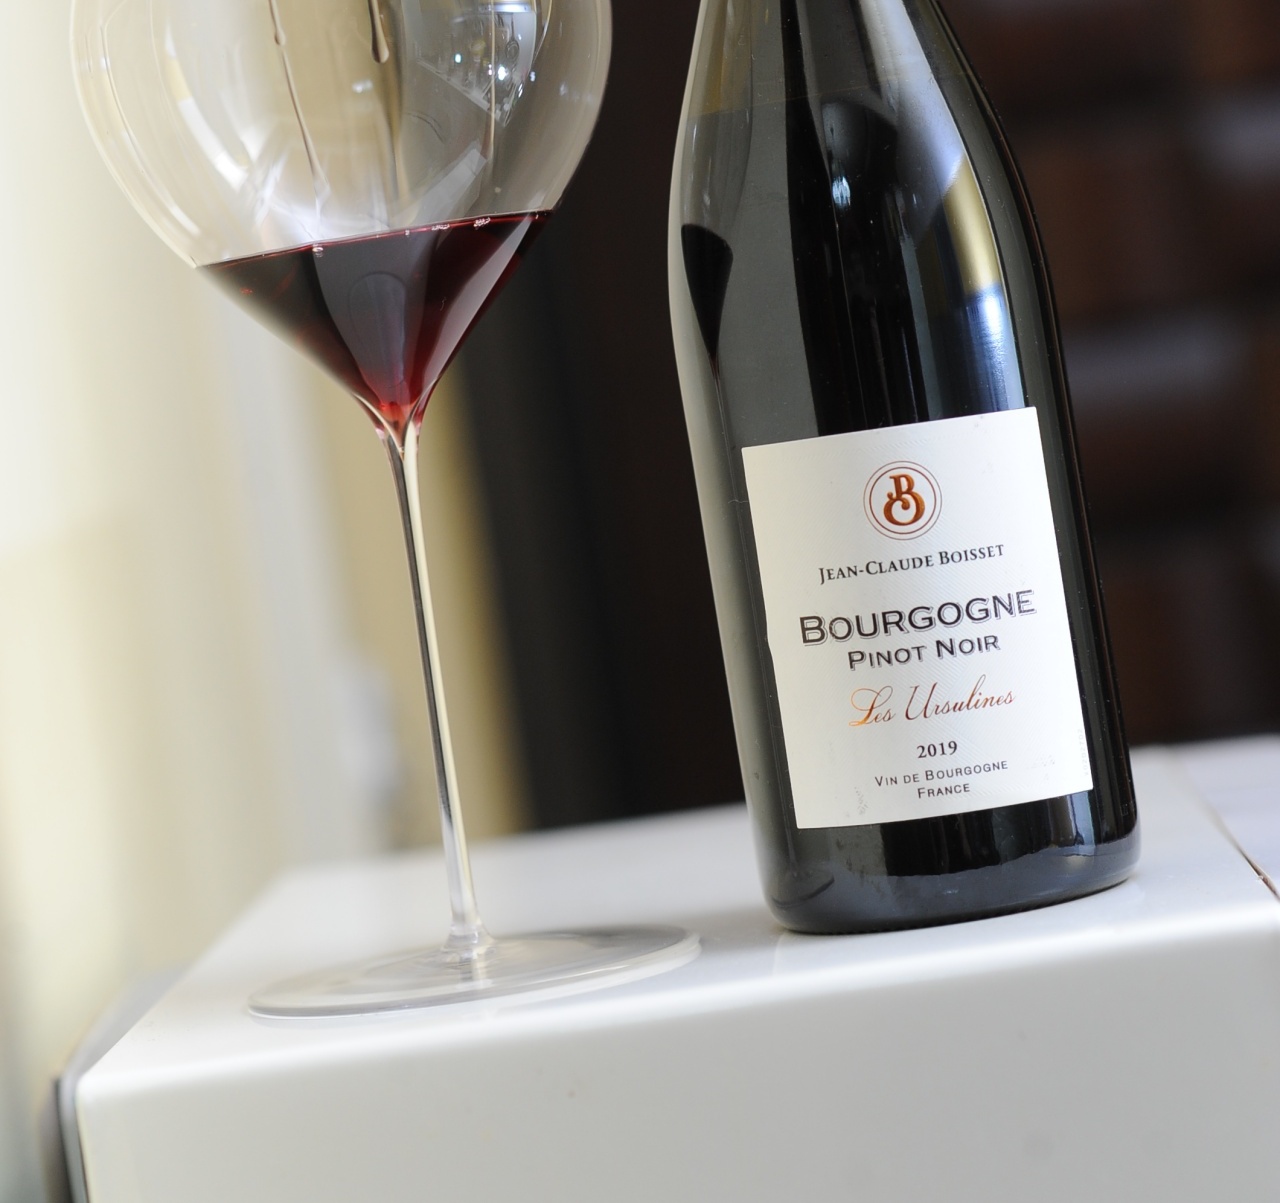 Jean-Claude Boisset Pinot Noir Bourgogne 